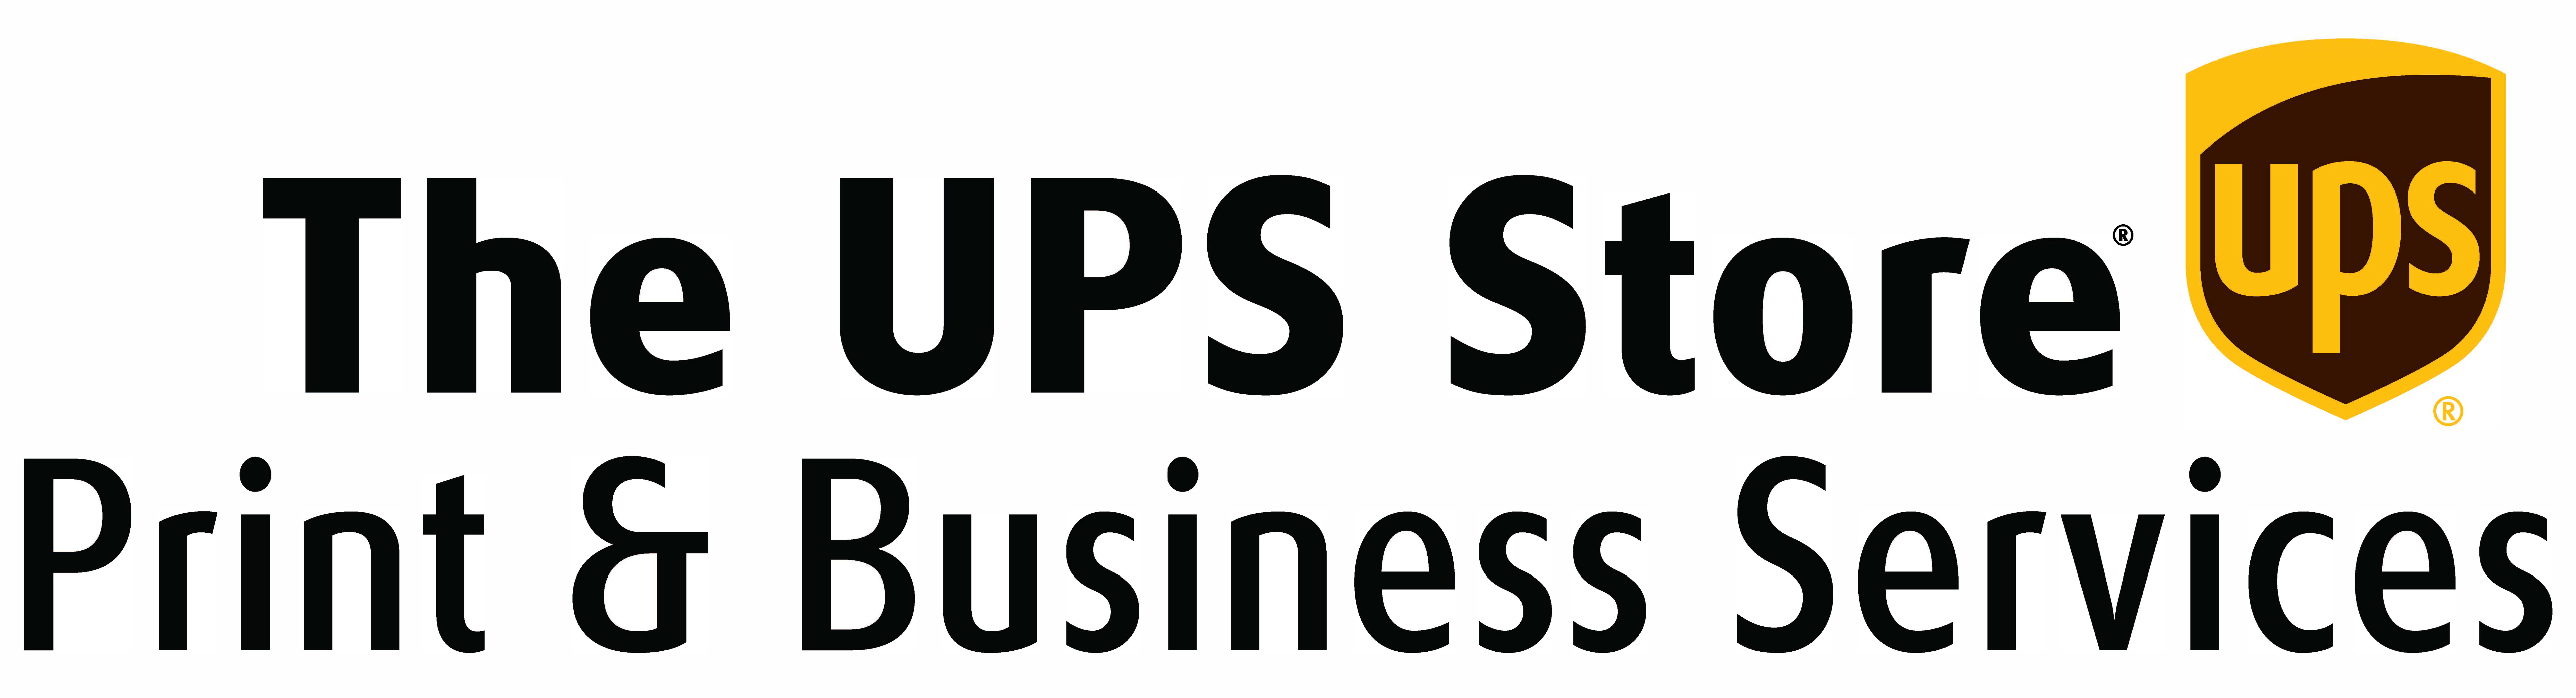 TUPSS Print & Business Services Logo Black with Colored Logo_ transparent bkgrnd (4)